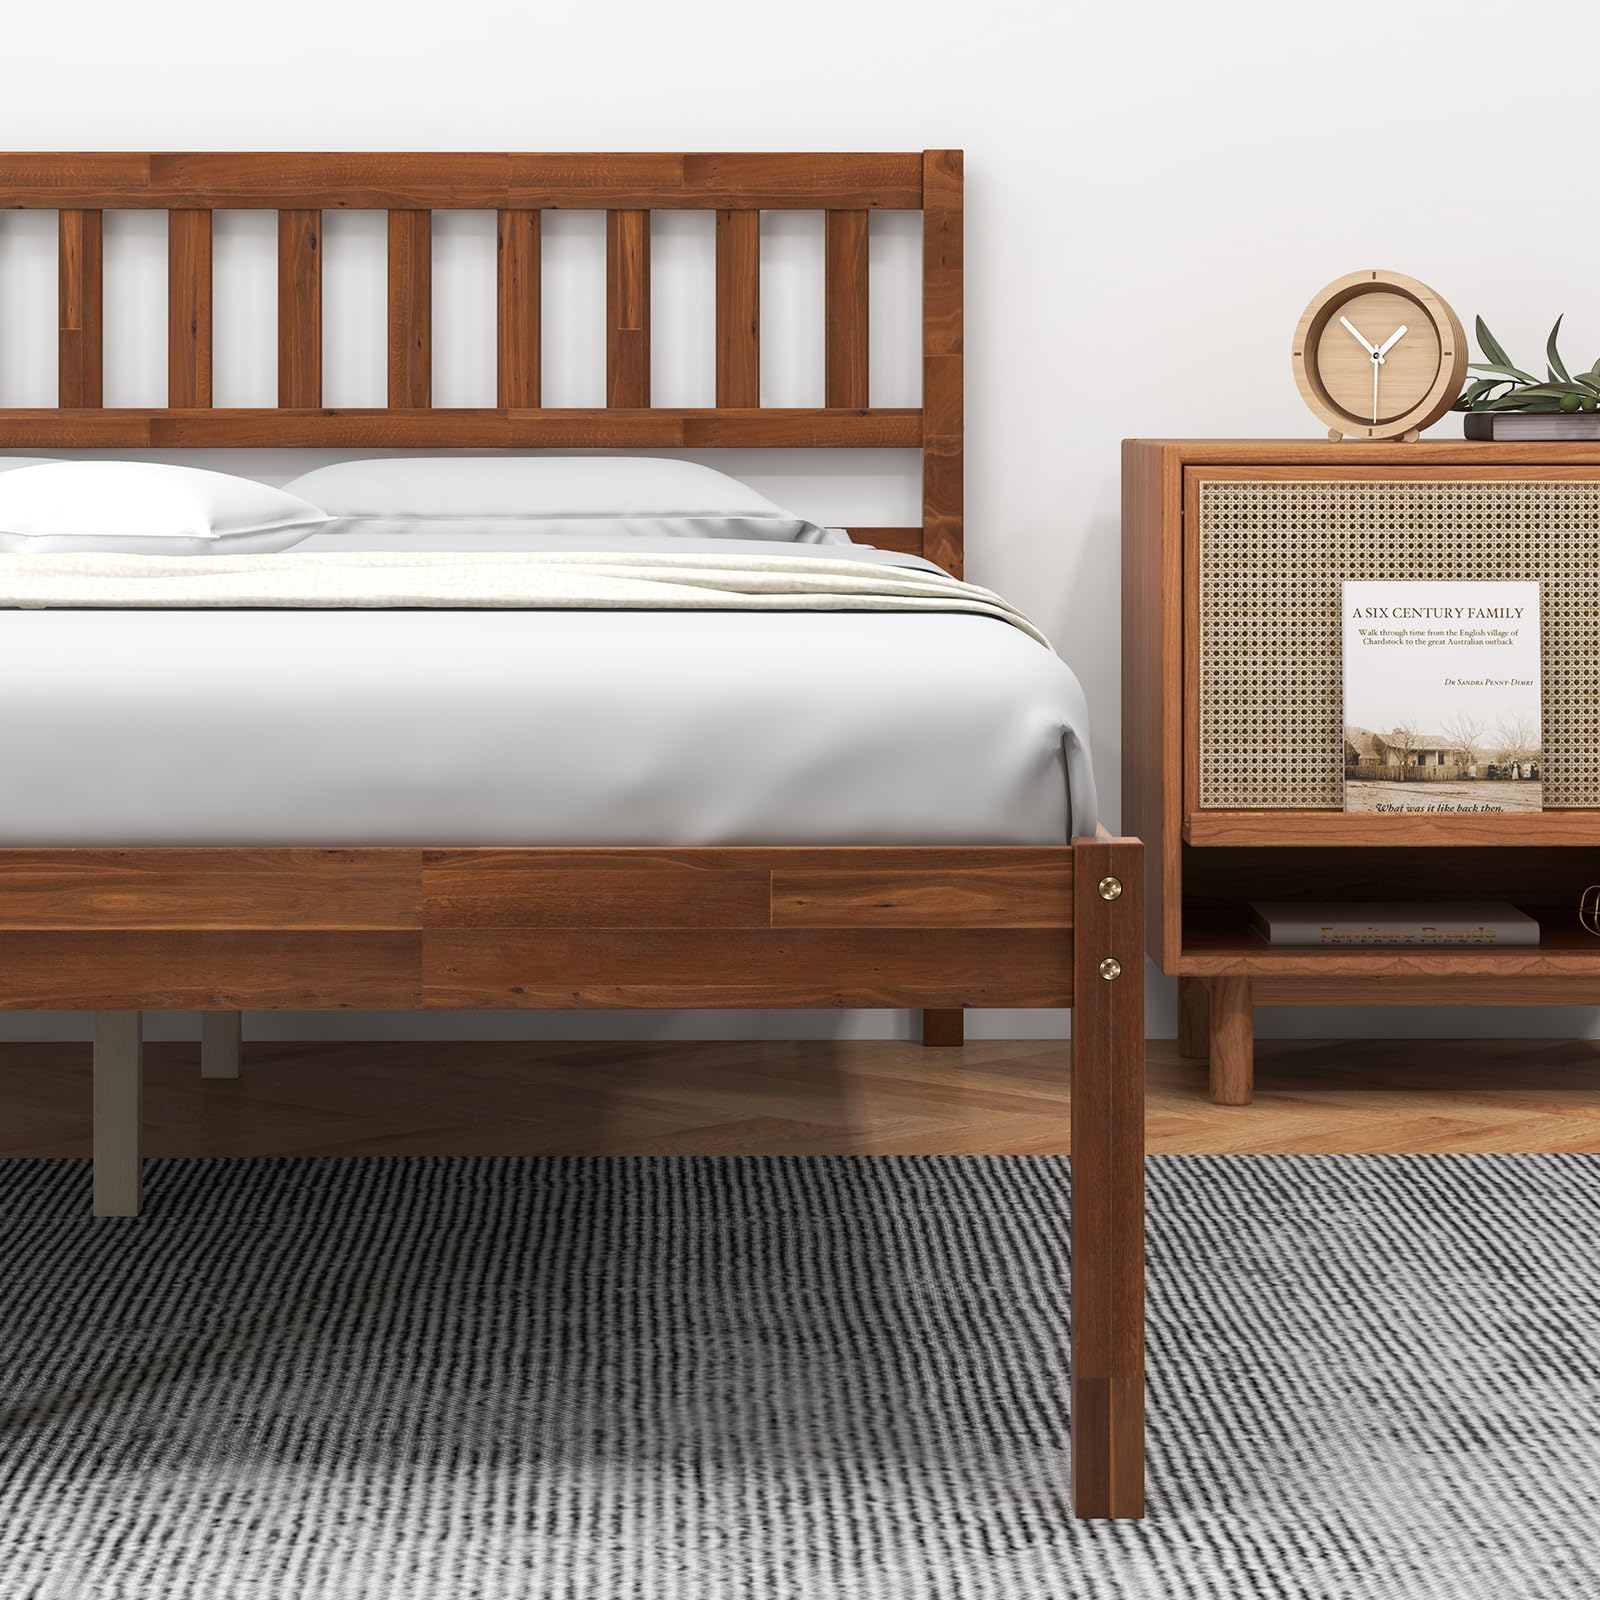 Giantex Wood Bed Frame with Headboard